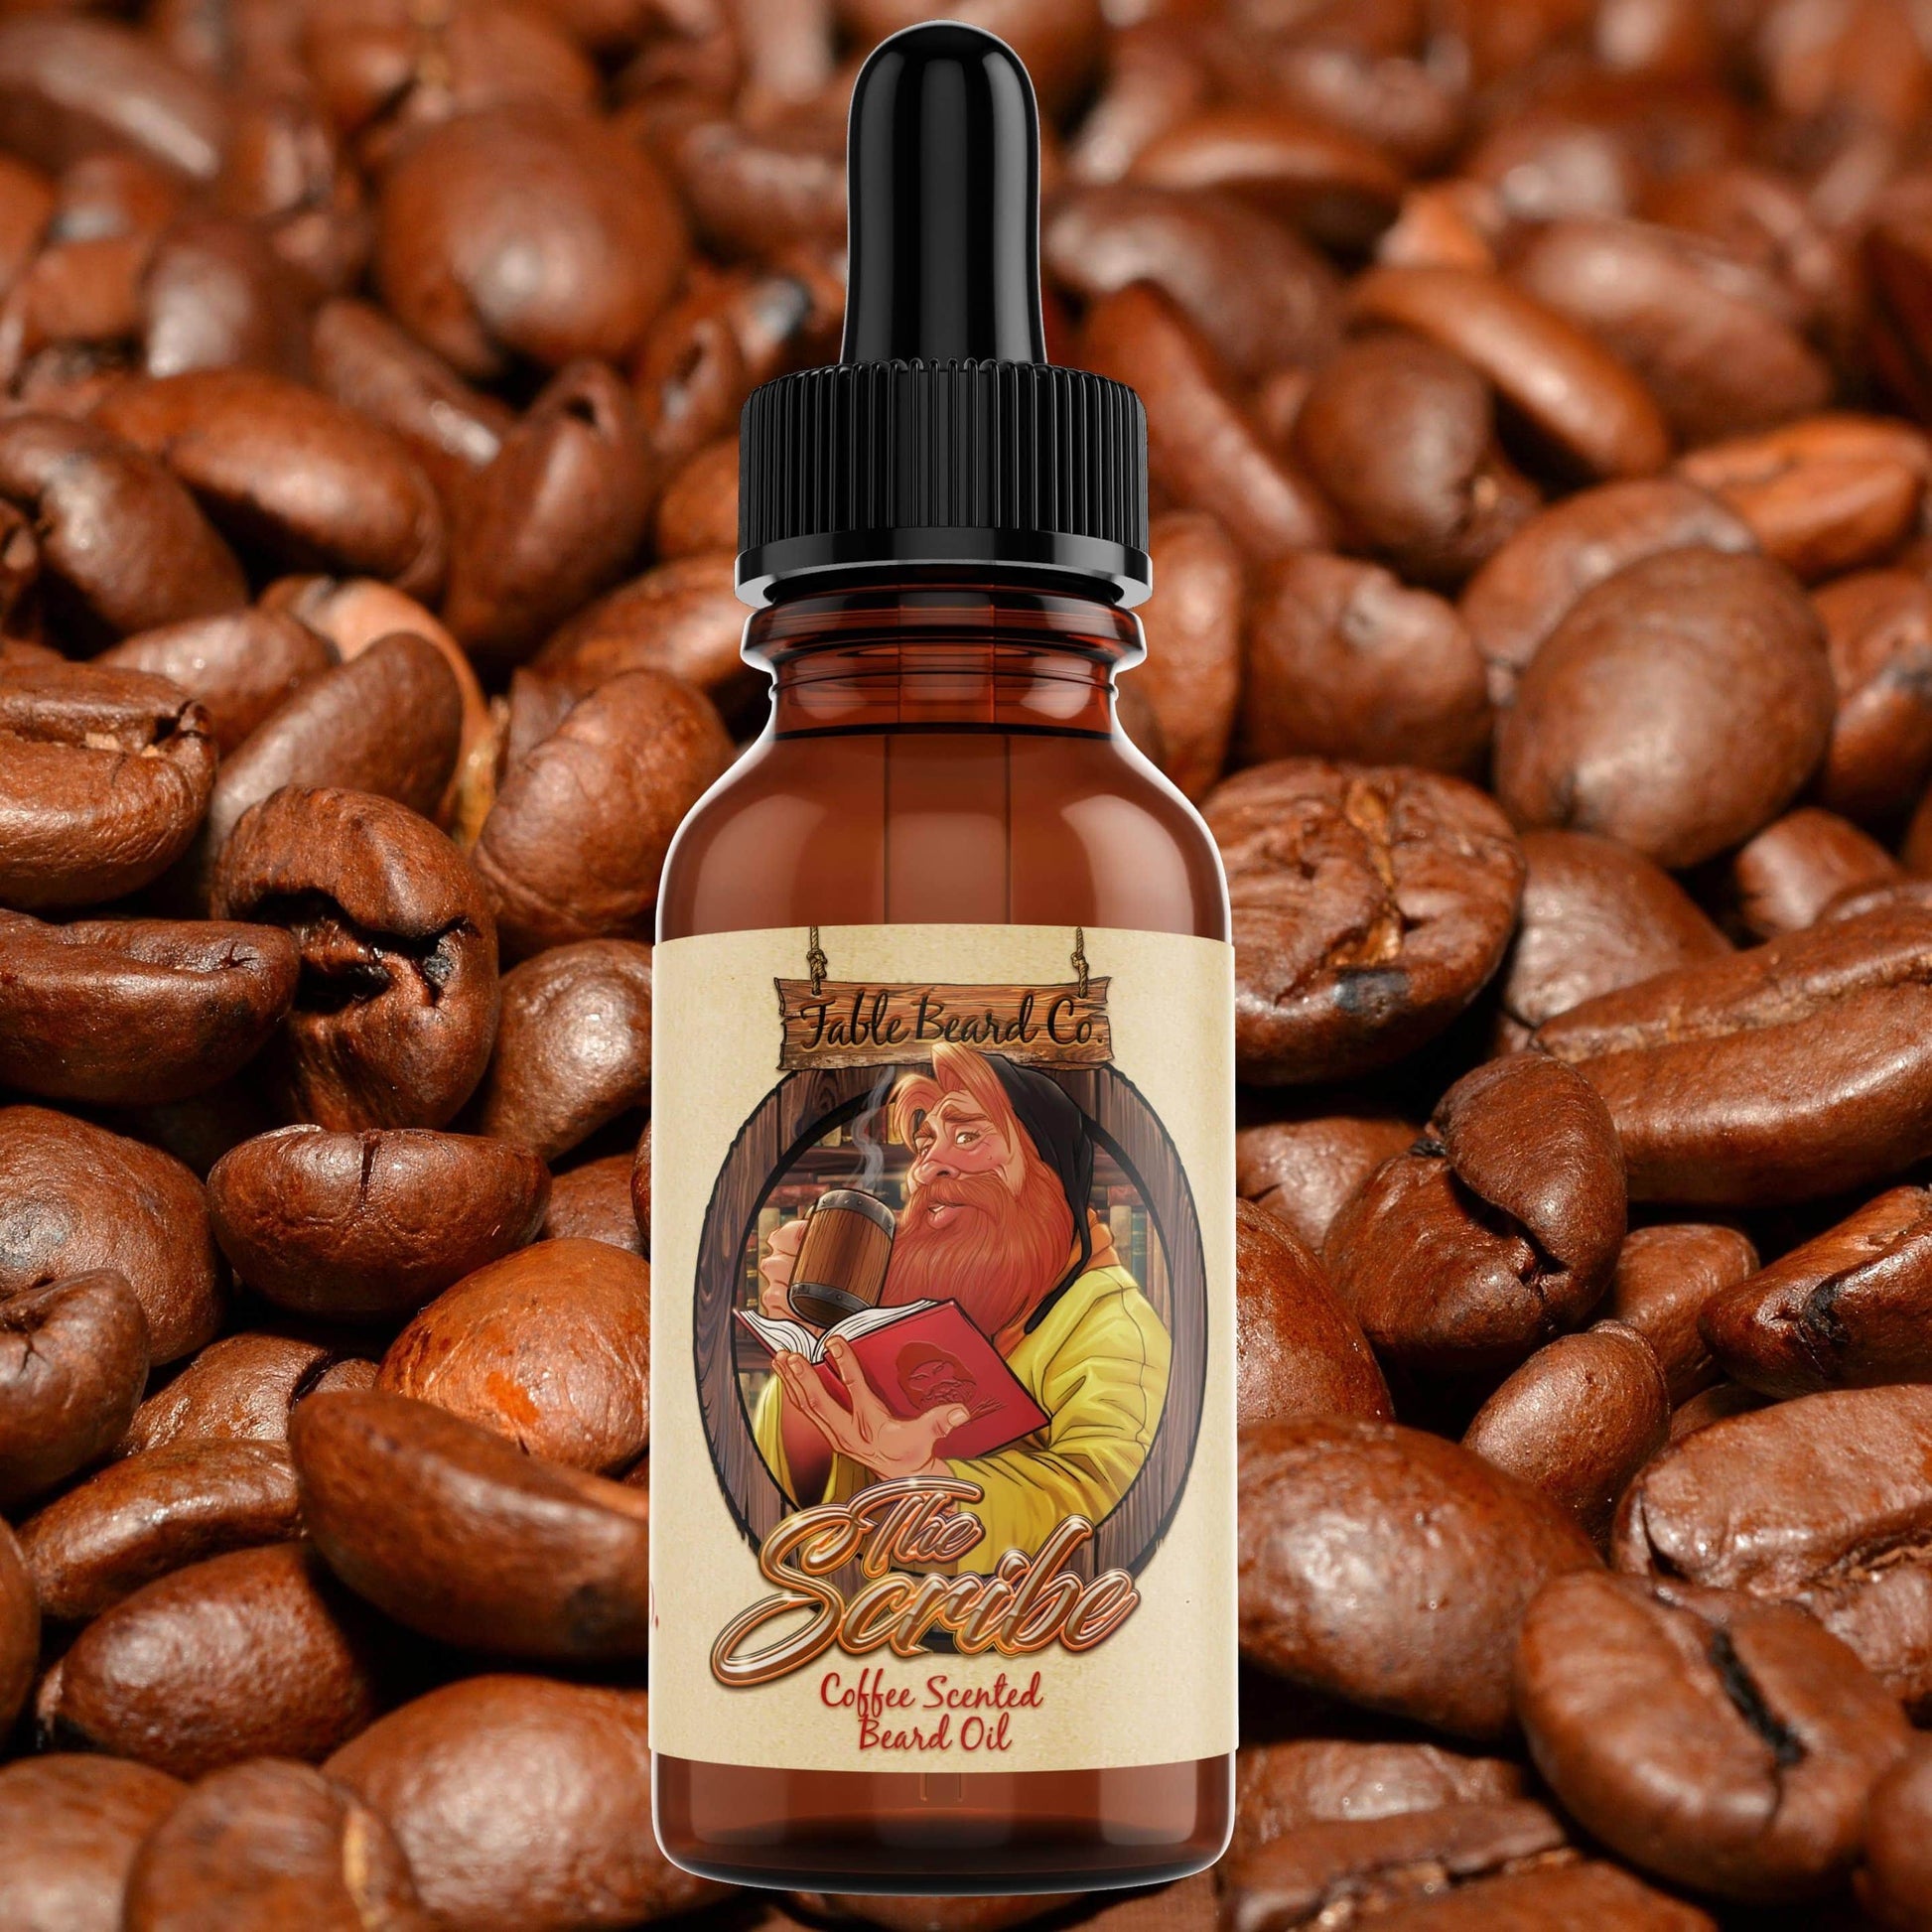 Fable Beard Co. Beard Oil 1oz The Scribe - A Coffee & Chocolate Scented Beard Oil